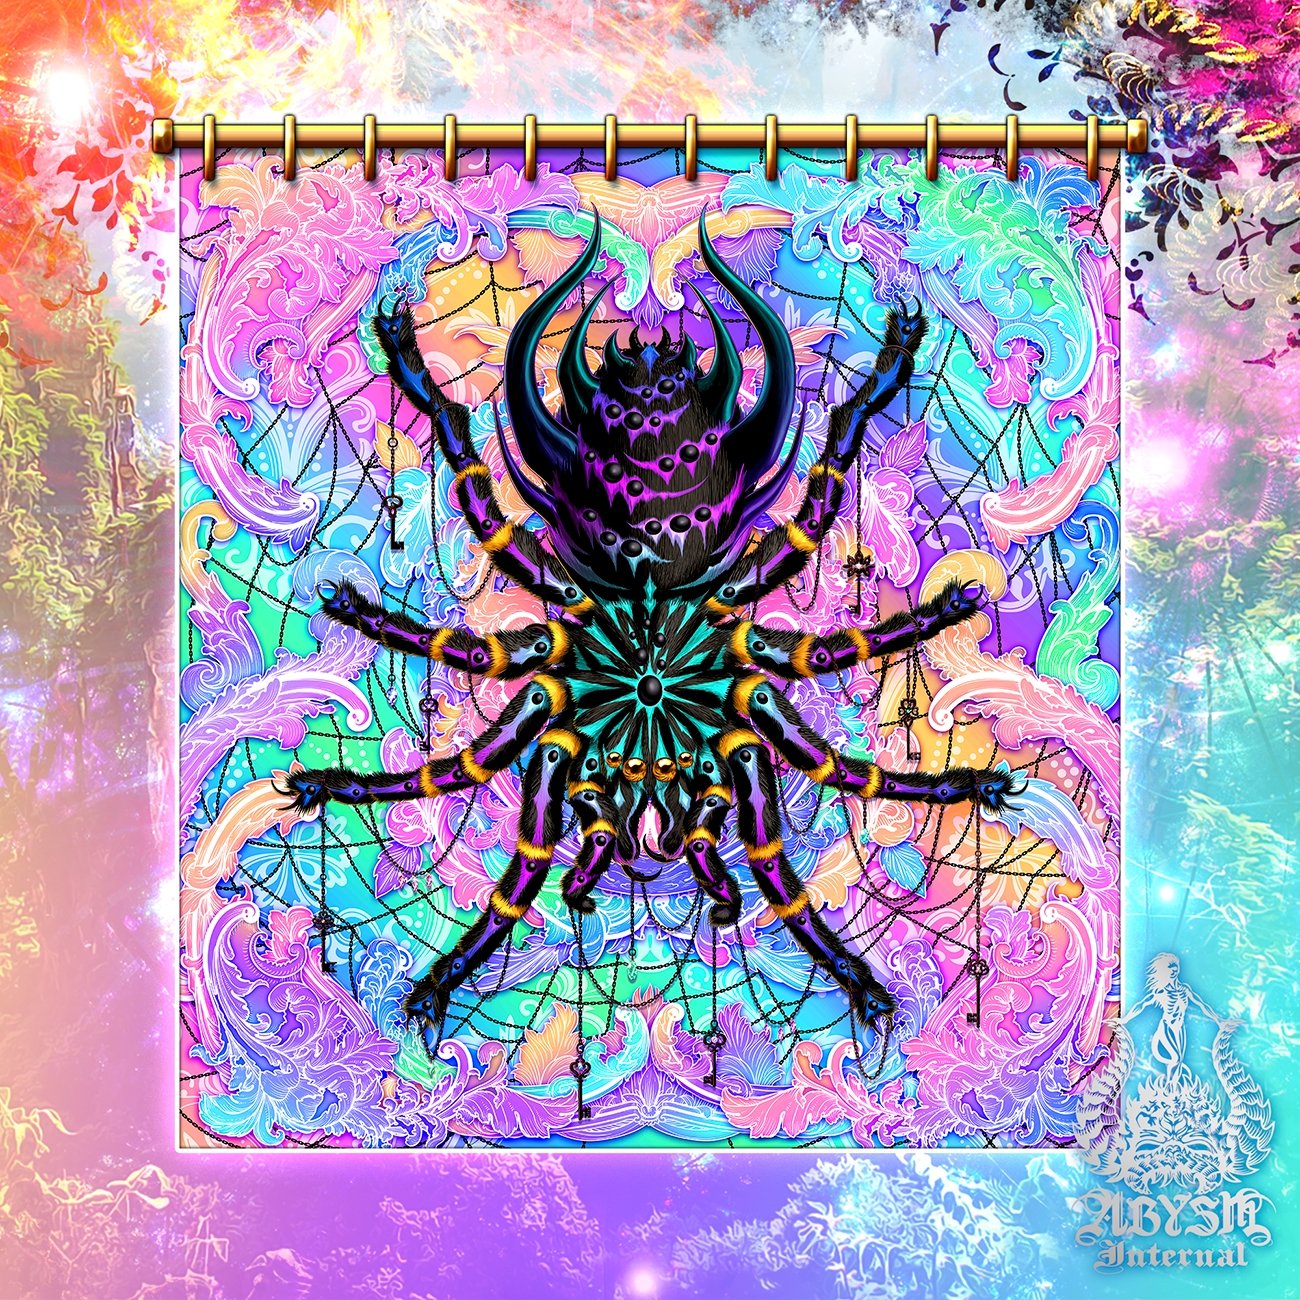 Psychedelic Shower Curtain, Aesthetic Bathroom Decor, Holographic Pastel Punk Black Home - Spider, Tarantula Art - Abysm Internal